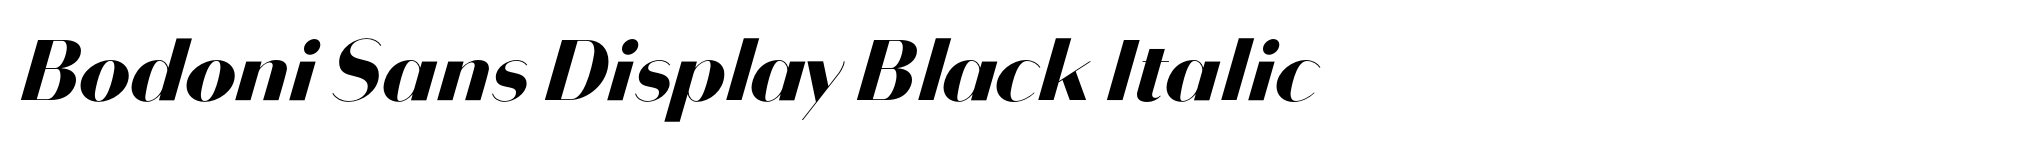 Bodoni Sans Display Black Italic image